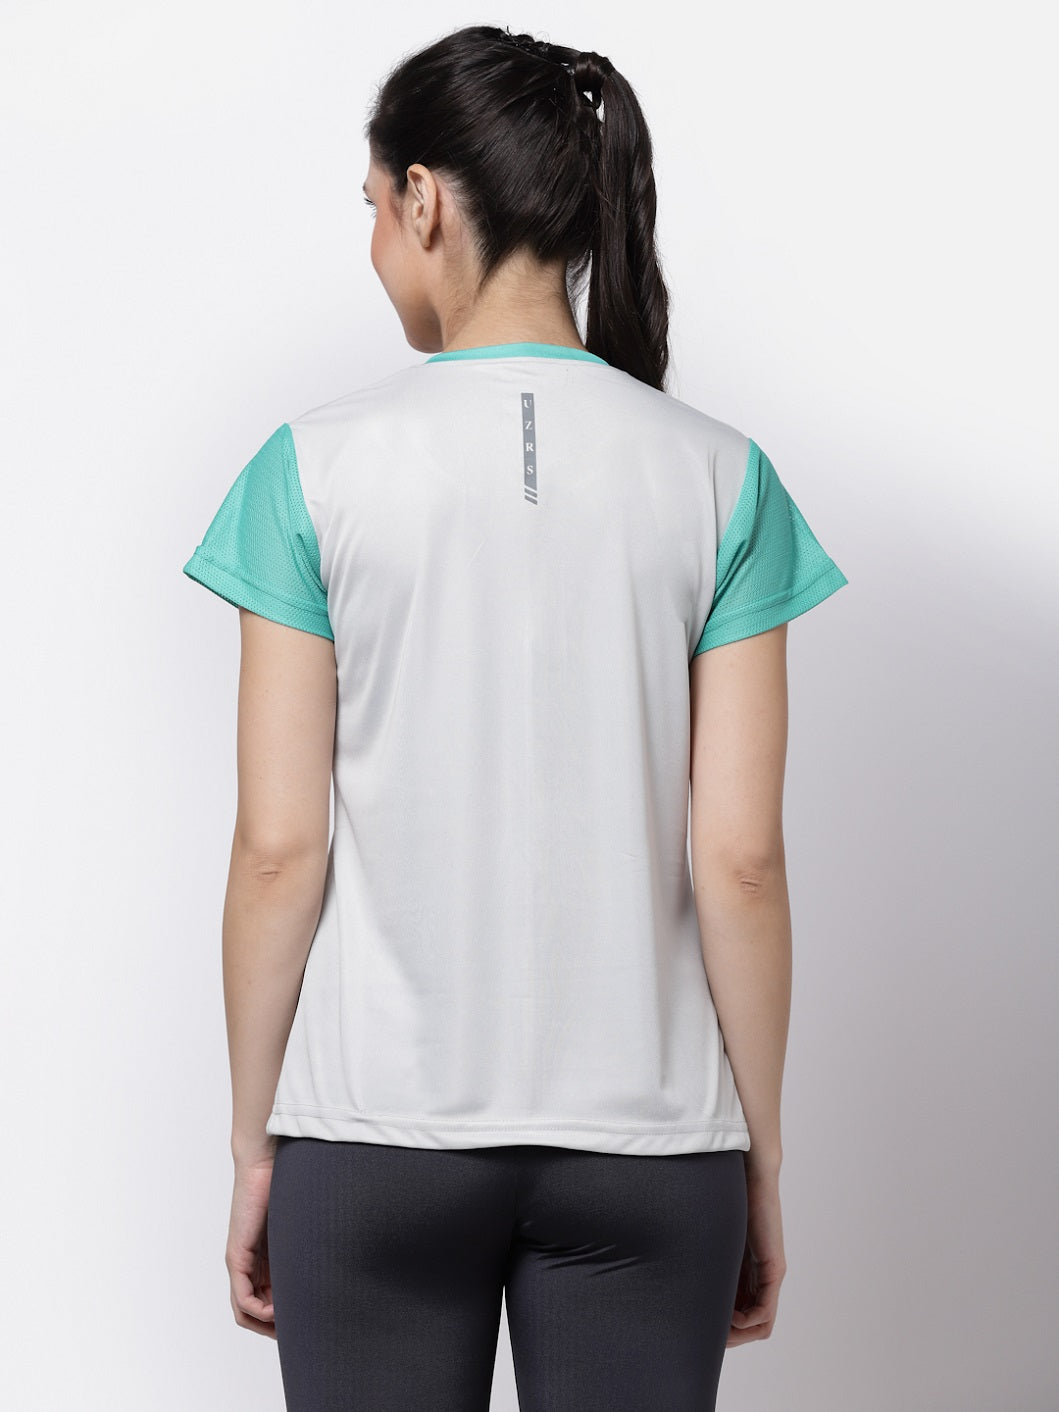 UZARUS Women's Half Sleeves Sports Gym T-Shirt With Zipper